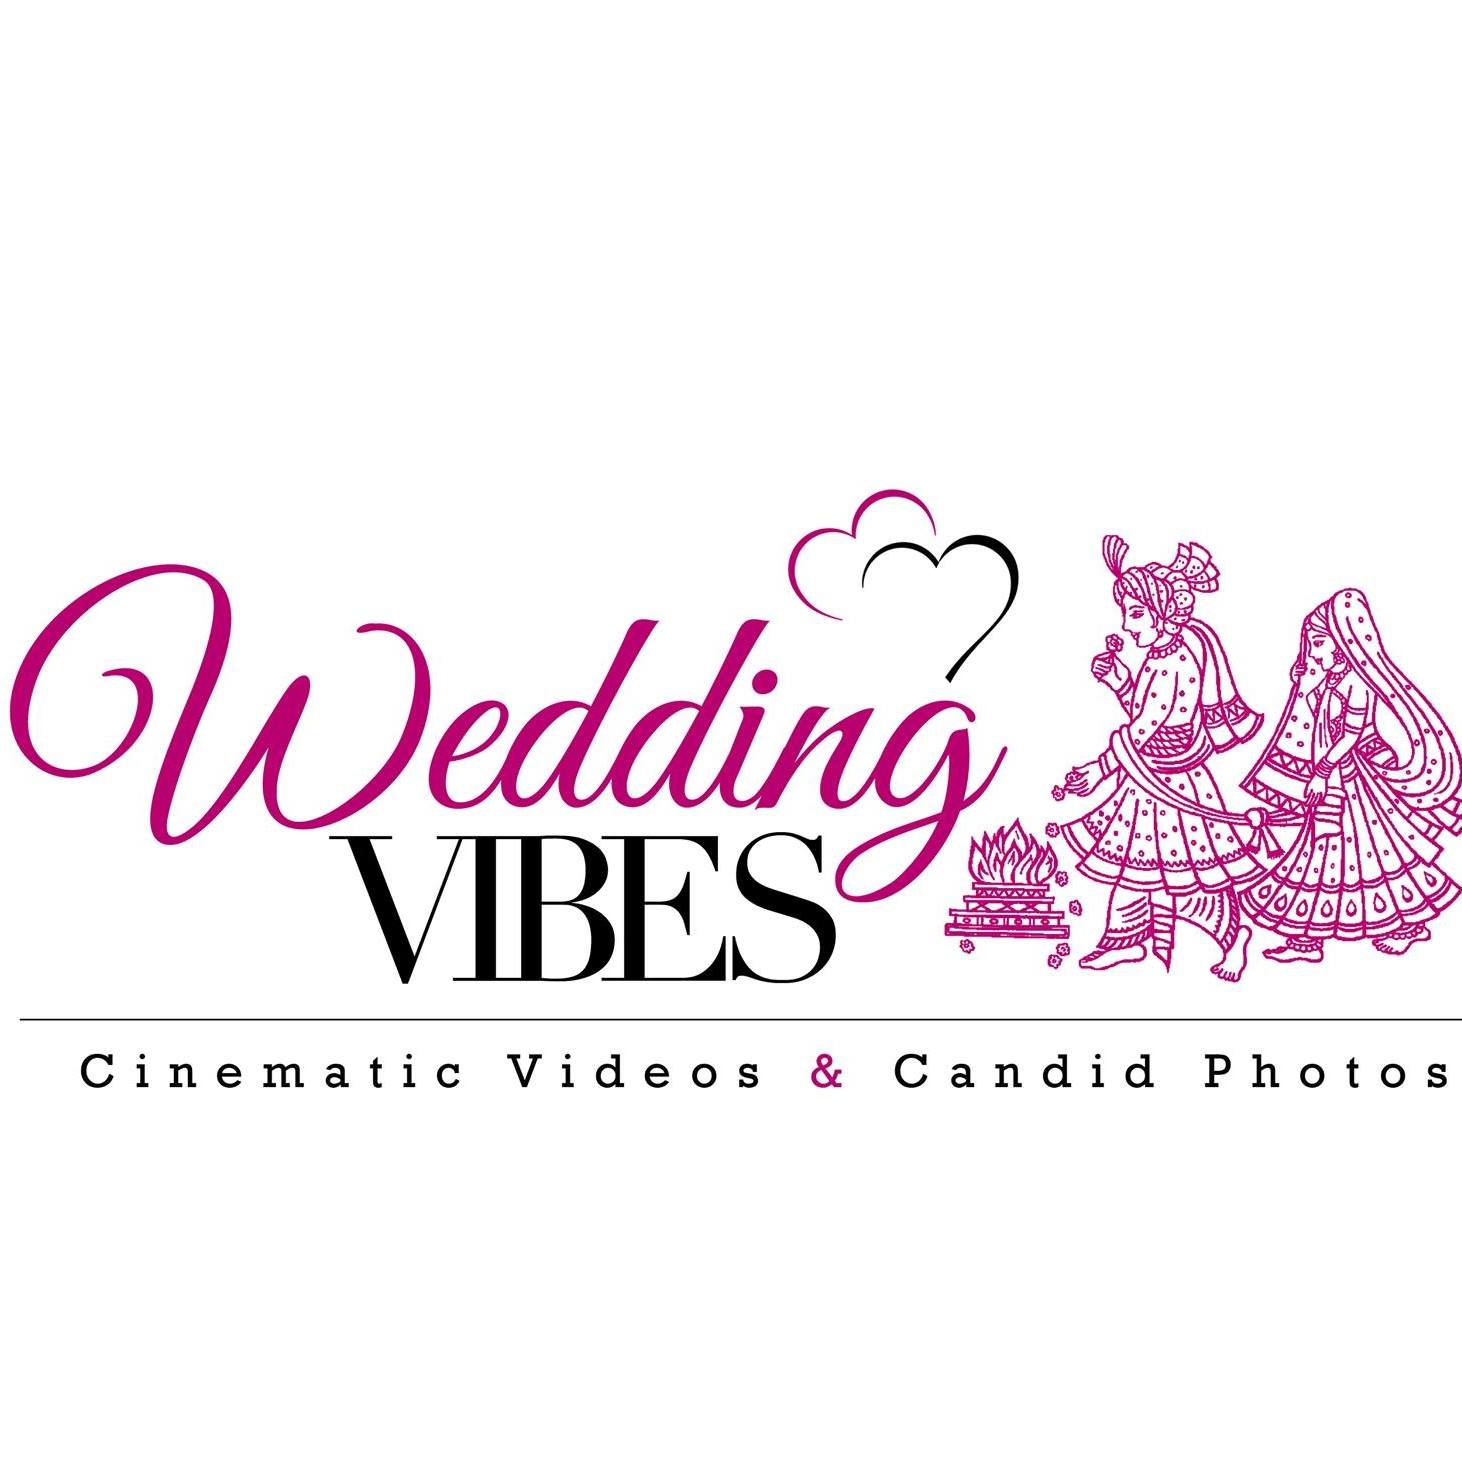 Wedding vibes Logo